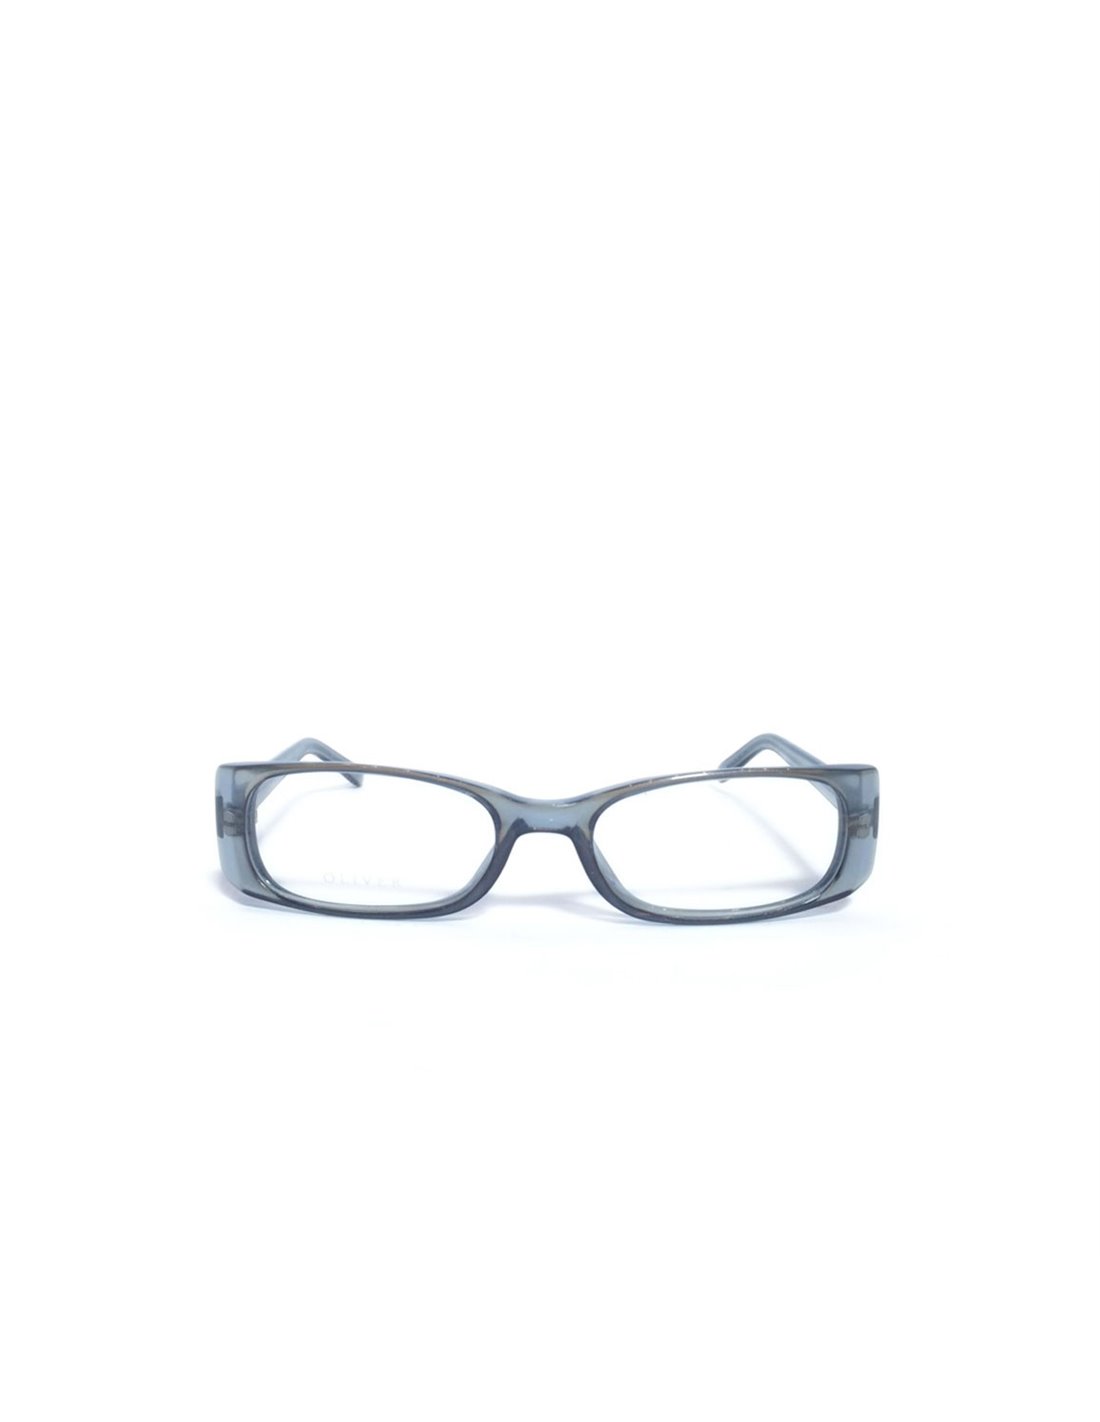 Montature occhiali da vista donna Fendi F700 - Stilottica Italiana  Import-Export S.r.l.